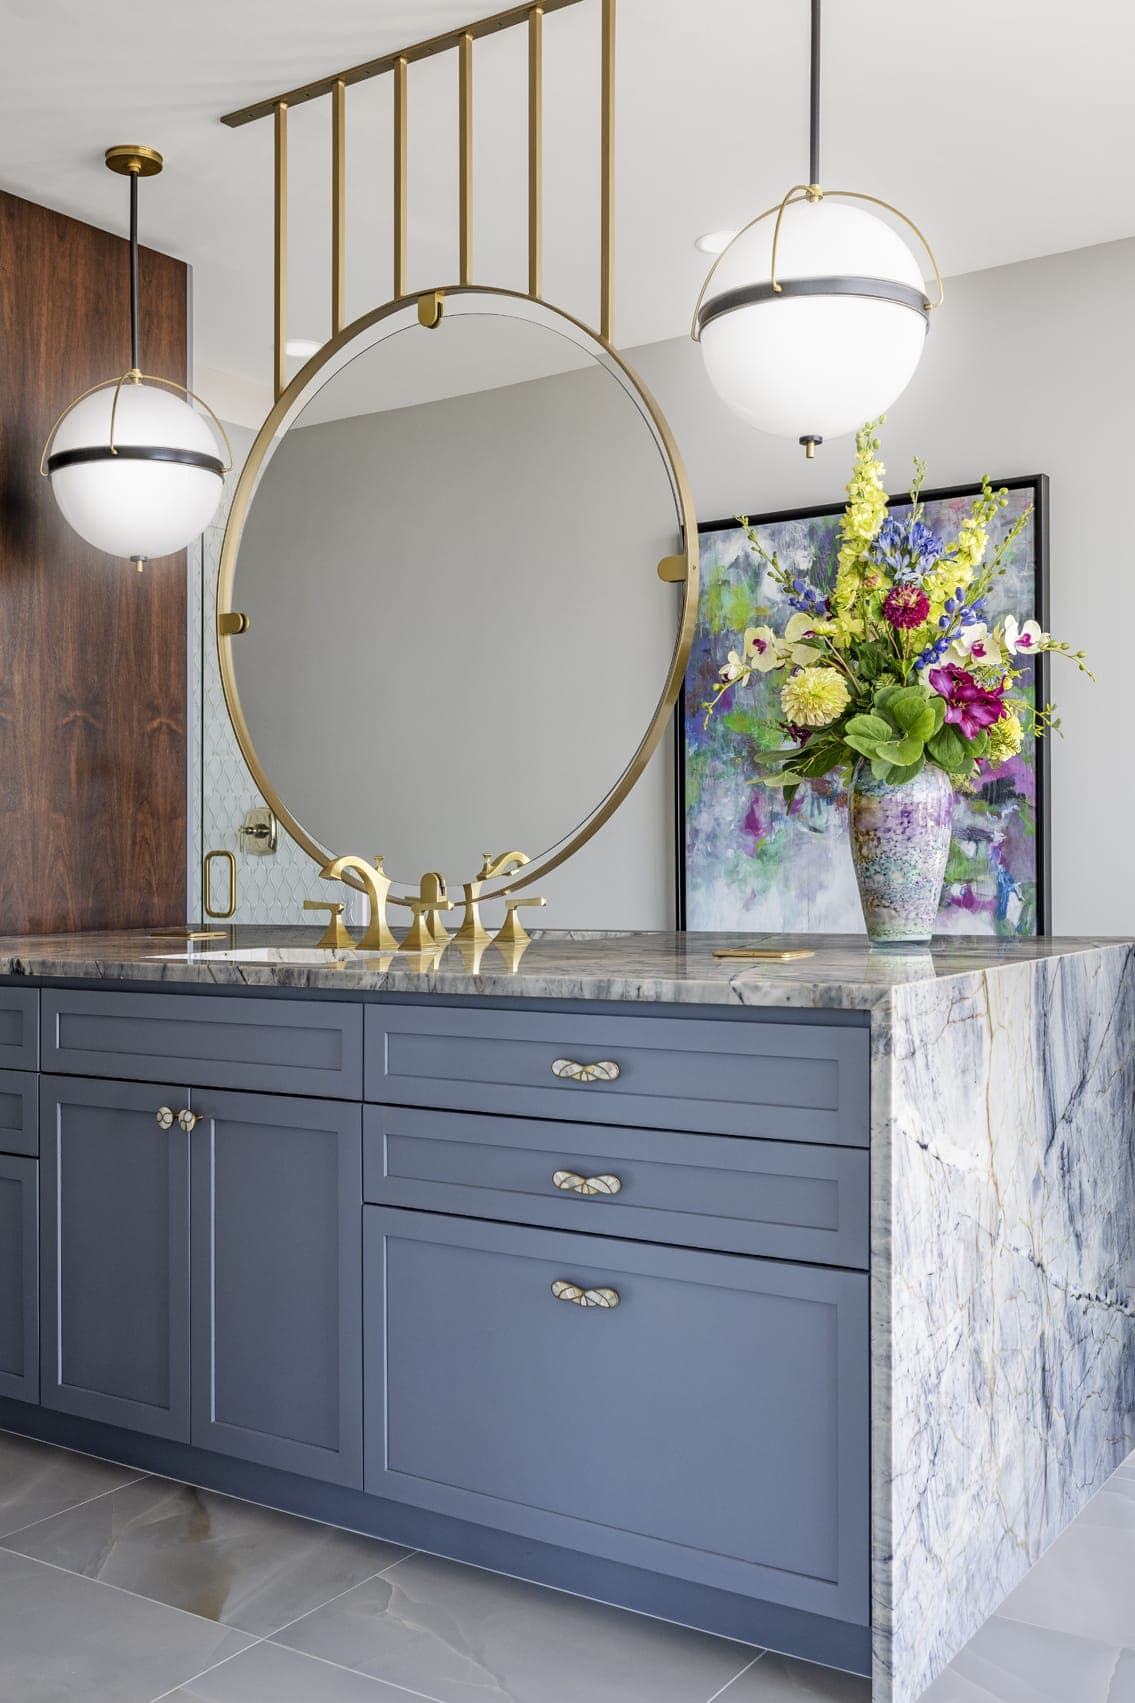 Master Bathroom Wash Sink Area Gold Circular Framed Mirror Dark Blue Cabinets Orbe Light Fixtures Three Quater View